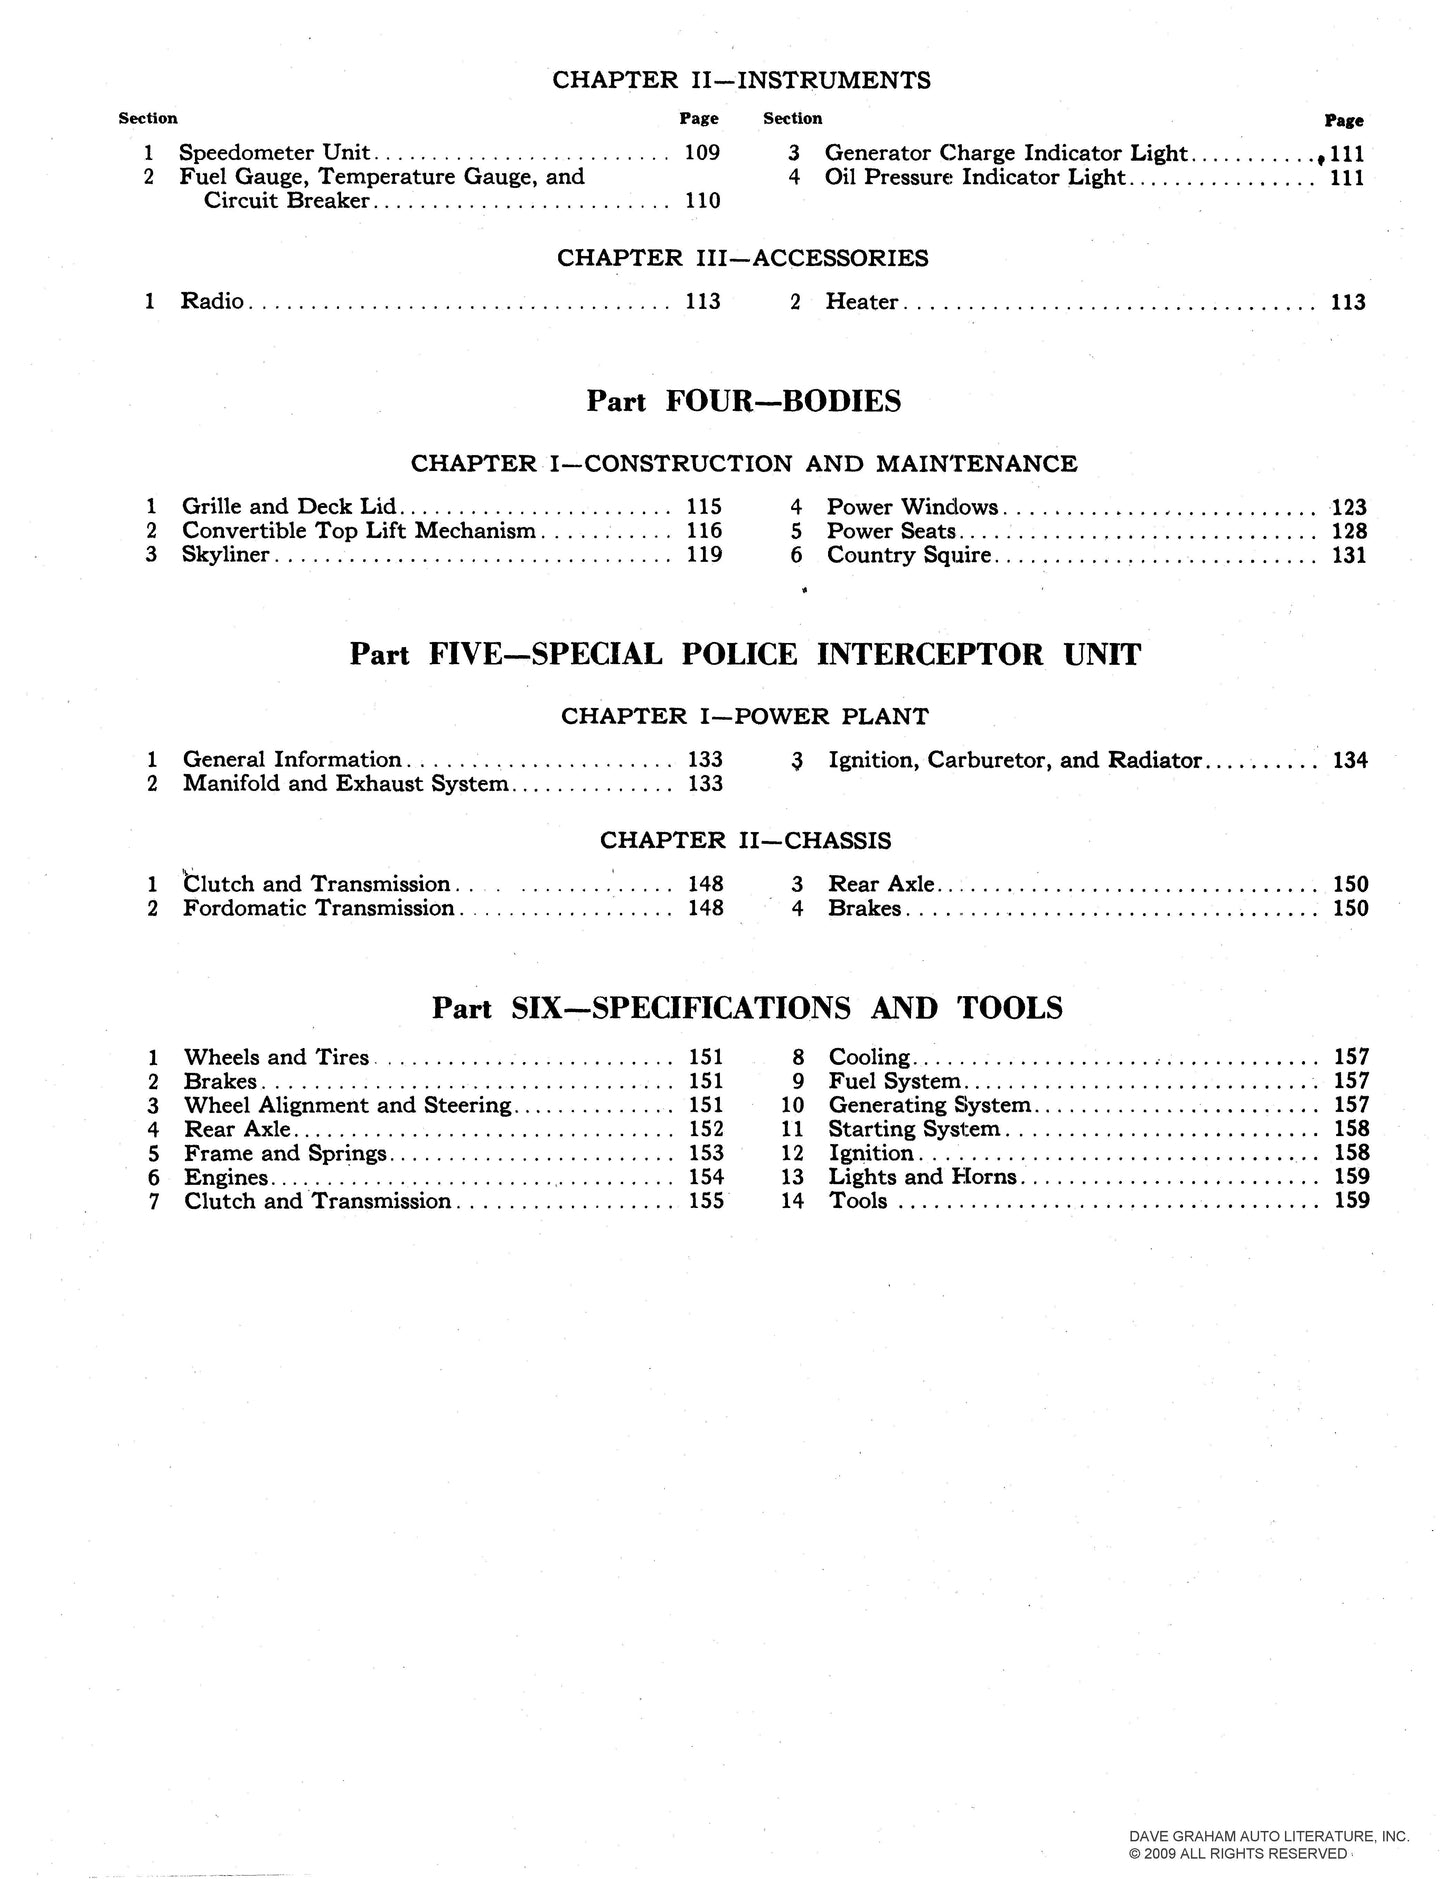 1952-1954 Ford Shop Manual - All Models